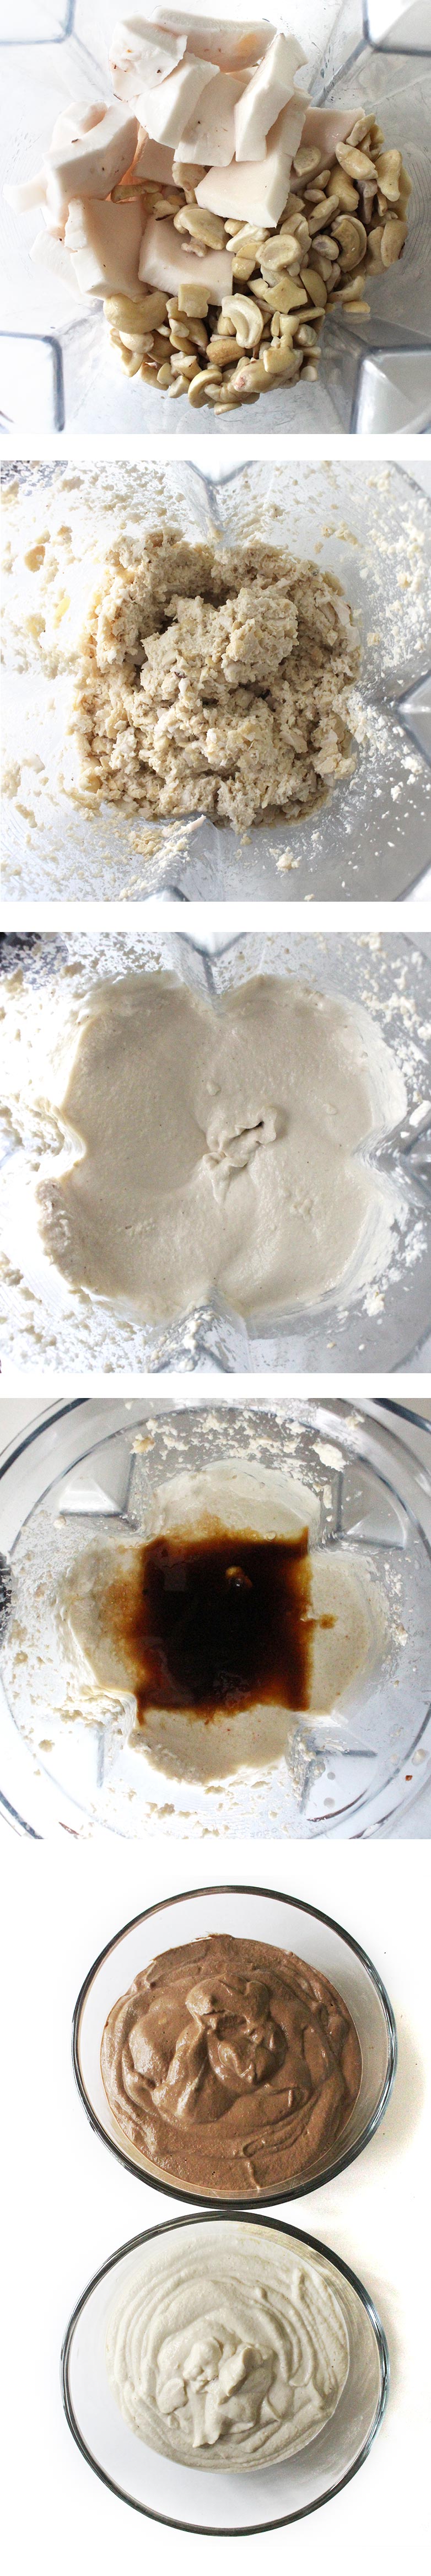 How to make coconut ice cream